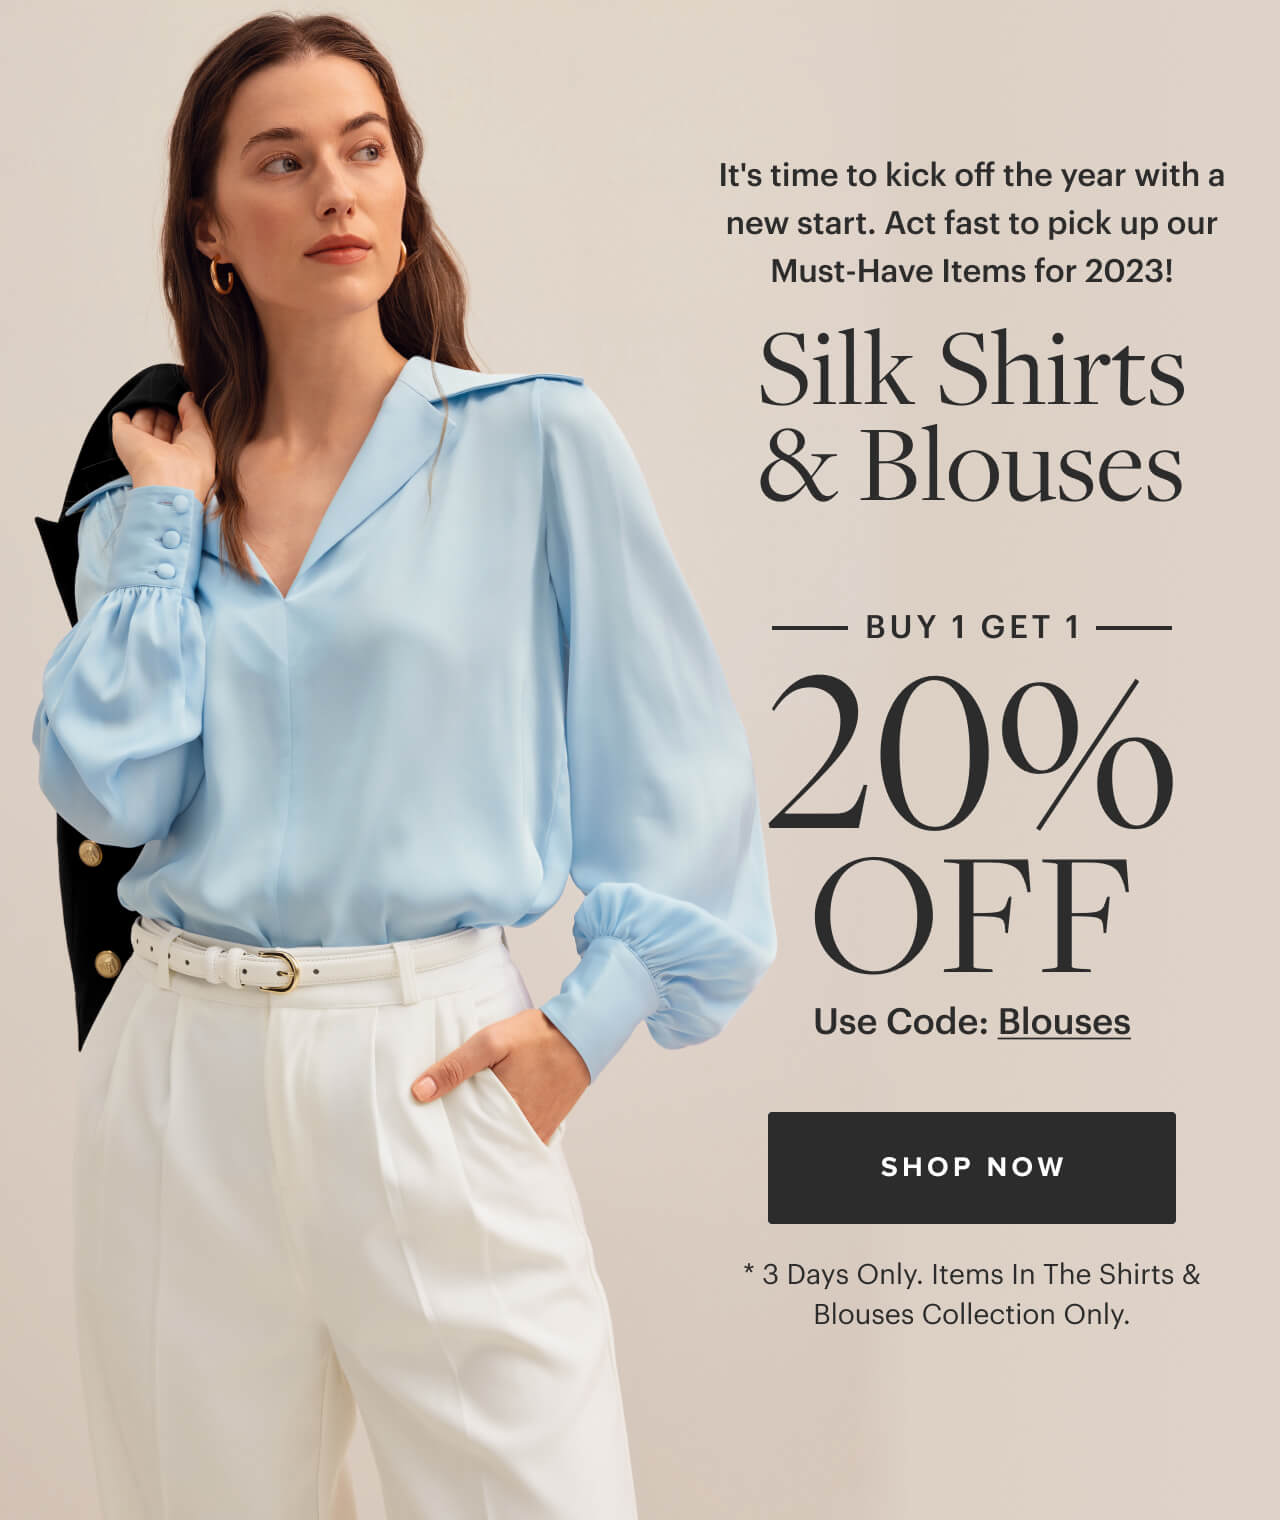 LILYSILK Louisville Print Silk Shirt for Women - Louisville Print